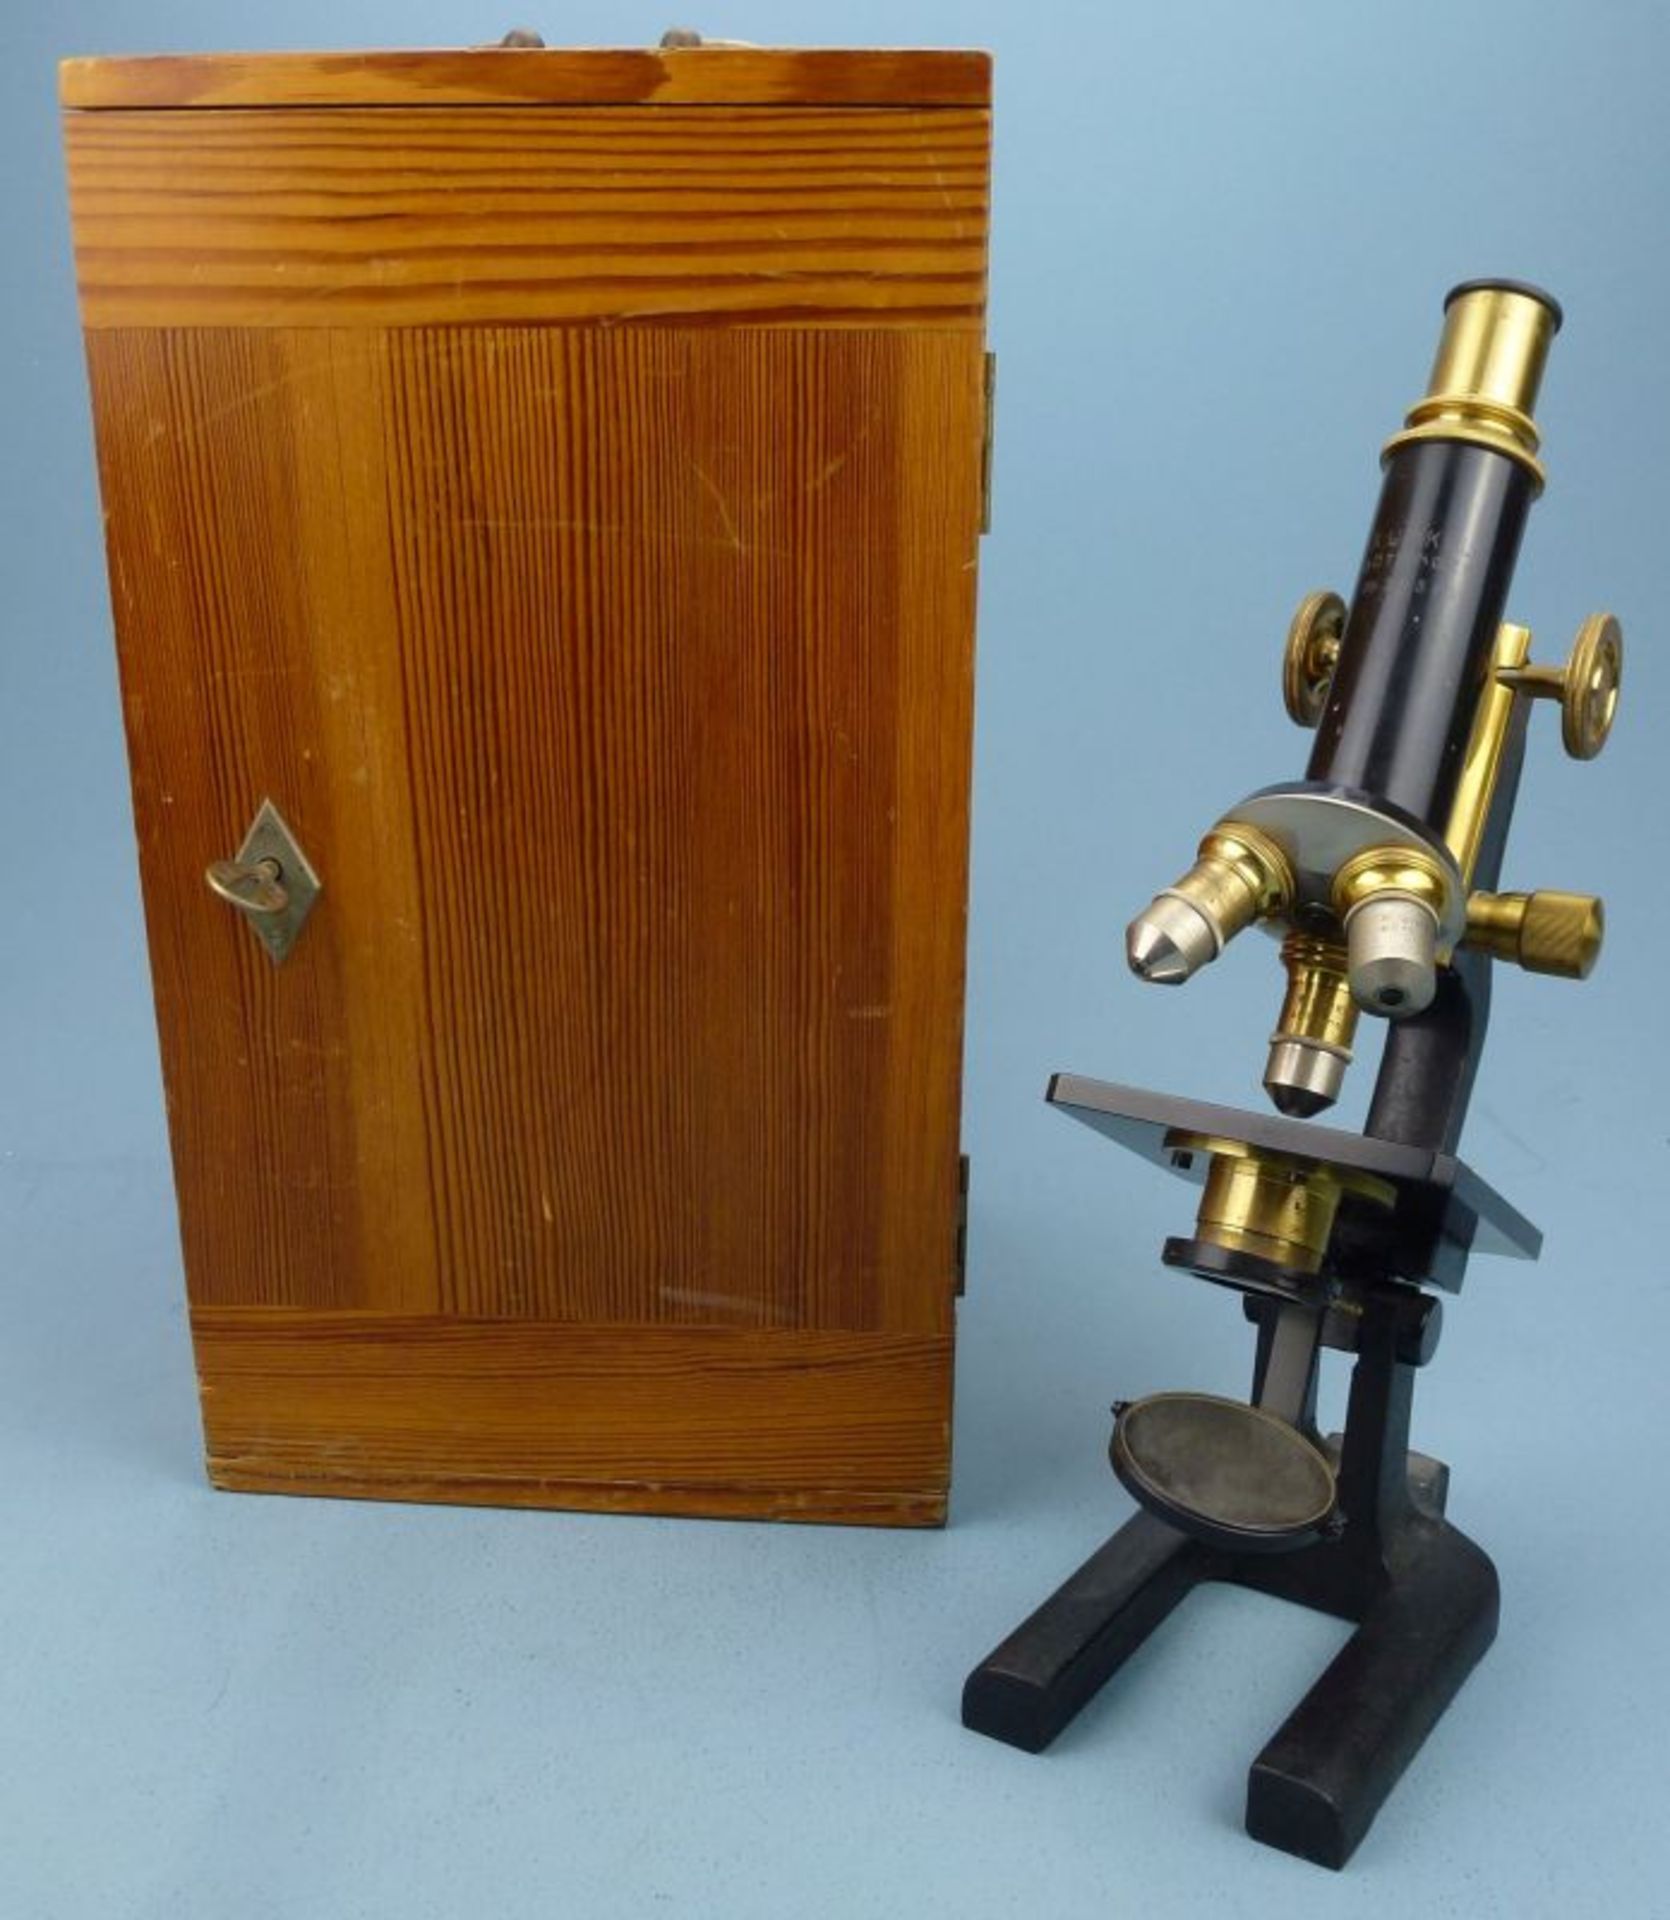 MikroskopMikroskopR. Winkel, Göttingen, um 1910 schwarz lackiertes Metall/Messing, 2 Okulare, 3